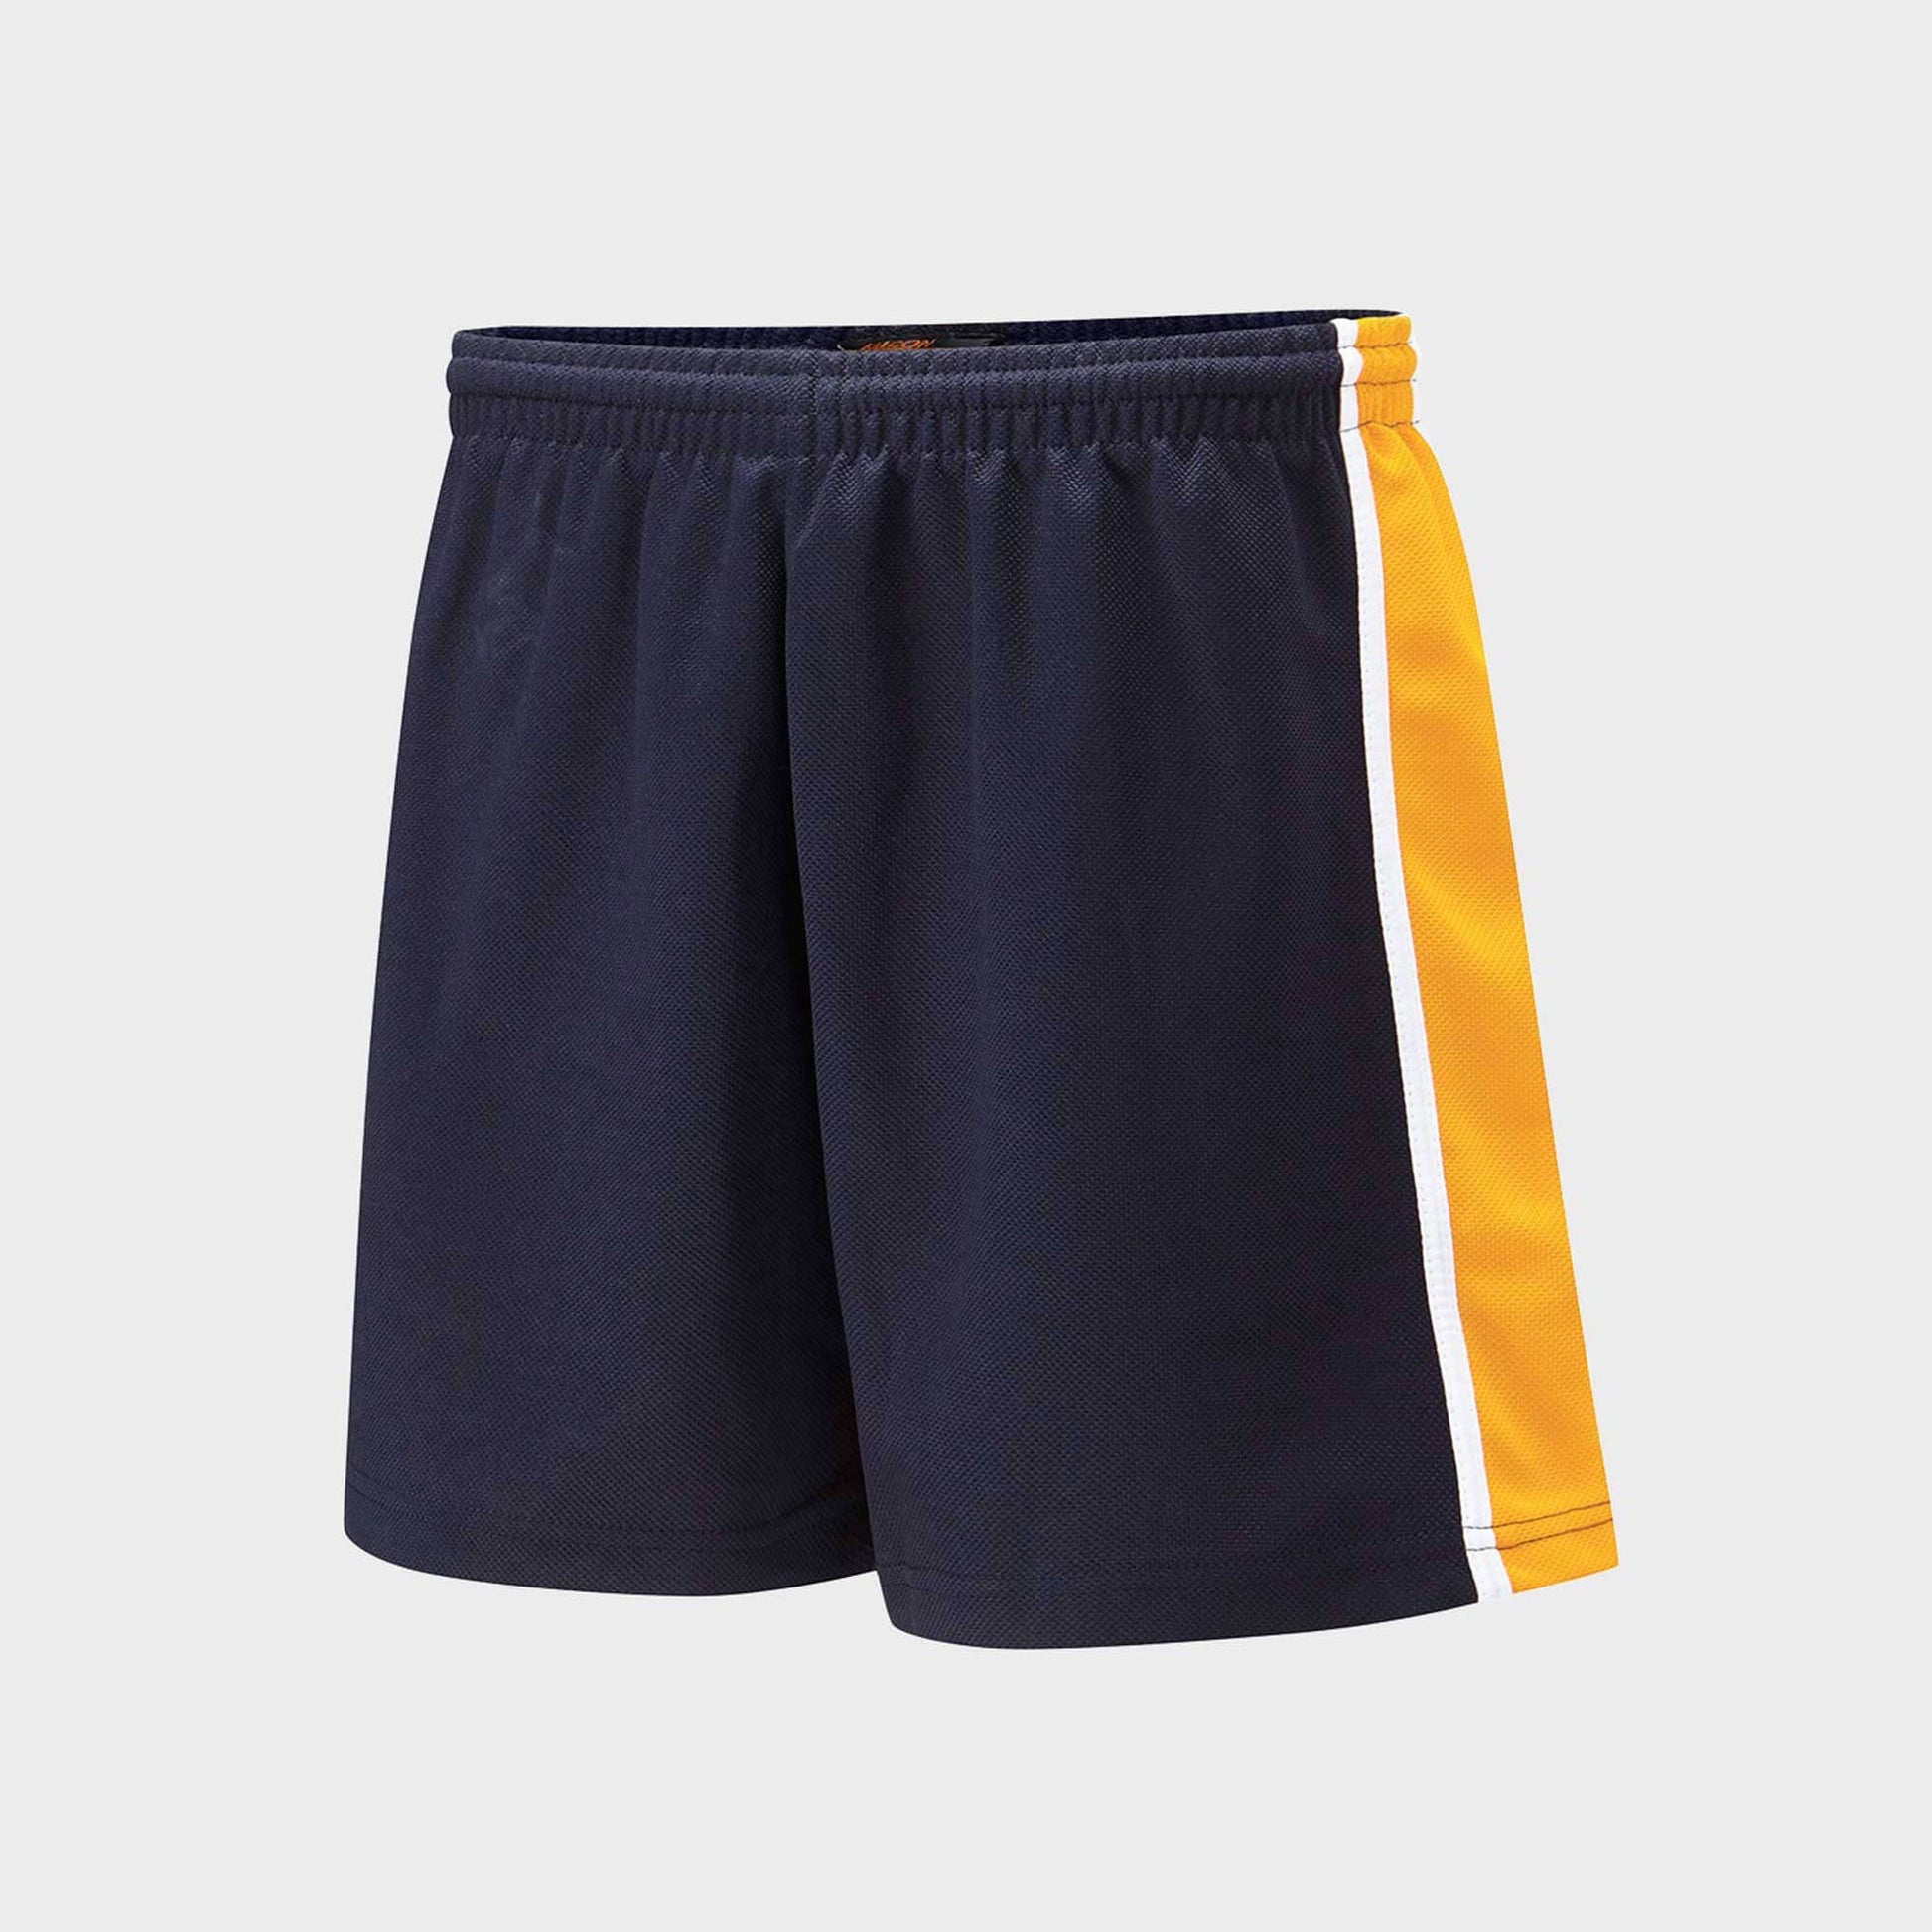 Falcon Men's Contrast panel Shorts Men's Shorts HAS Apparel Navy & Yellow 2XS 